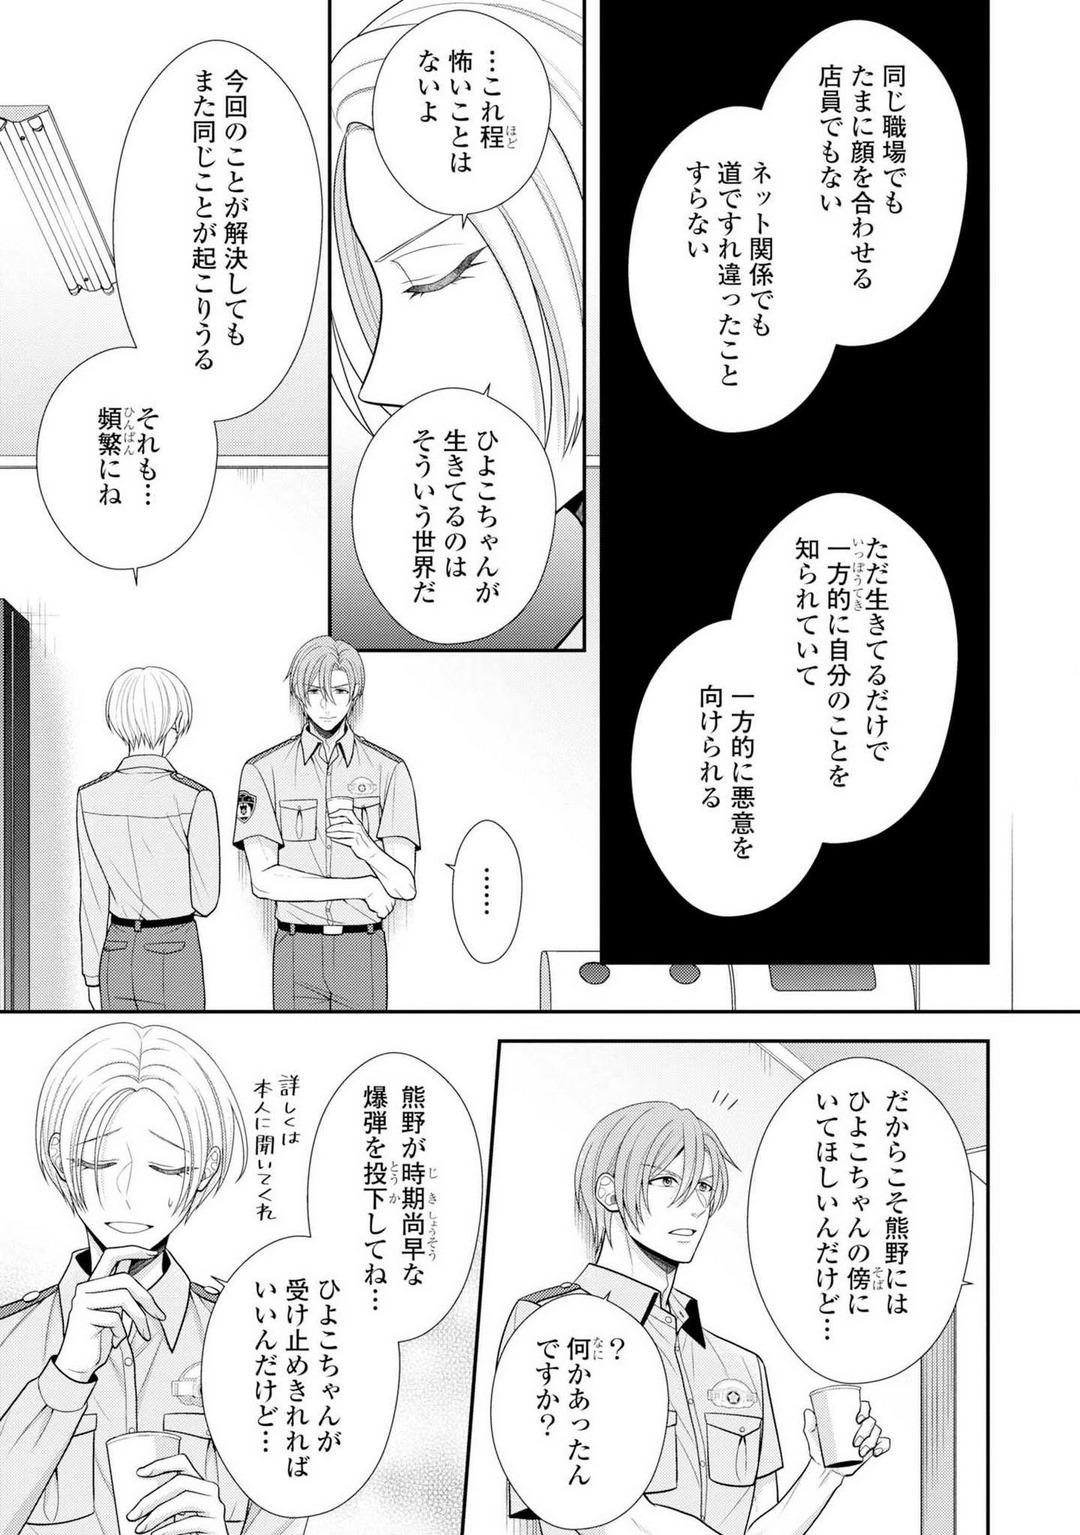 Titties Sono Keisatsukan, Tokidoki Yajuu! 19-36 Hardcore - Page 8